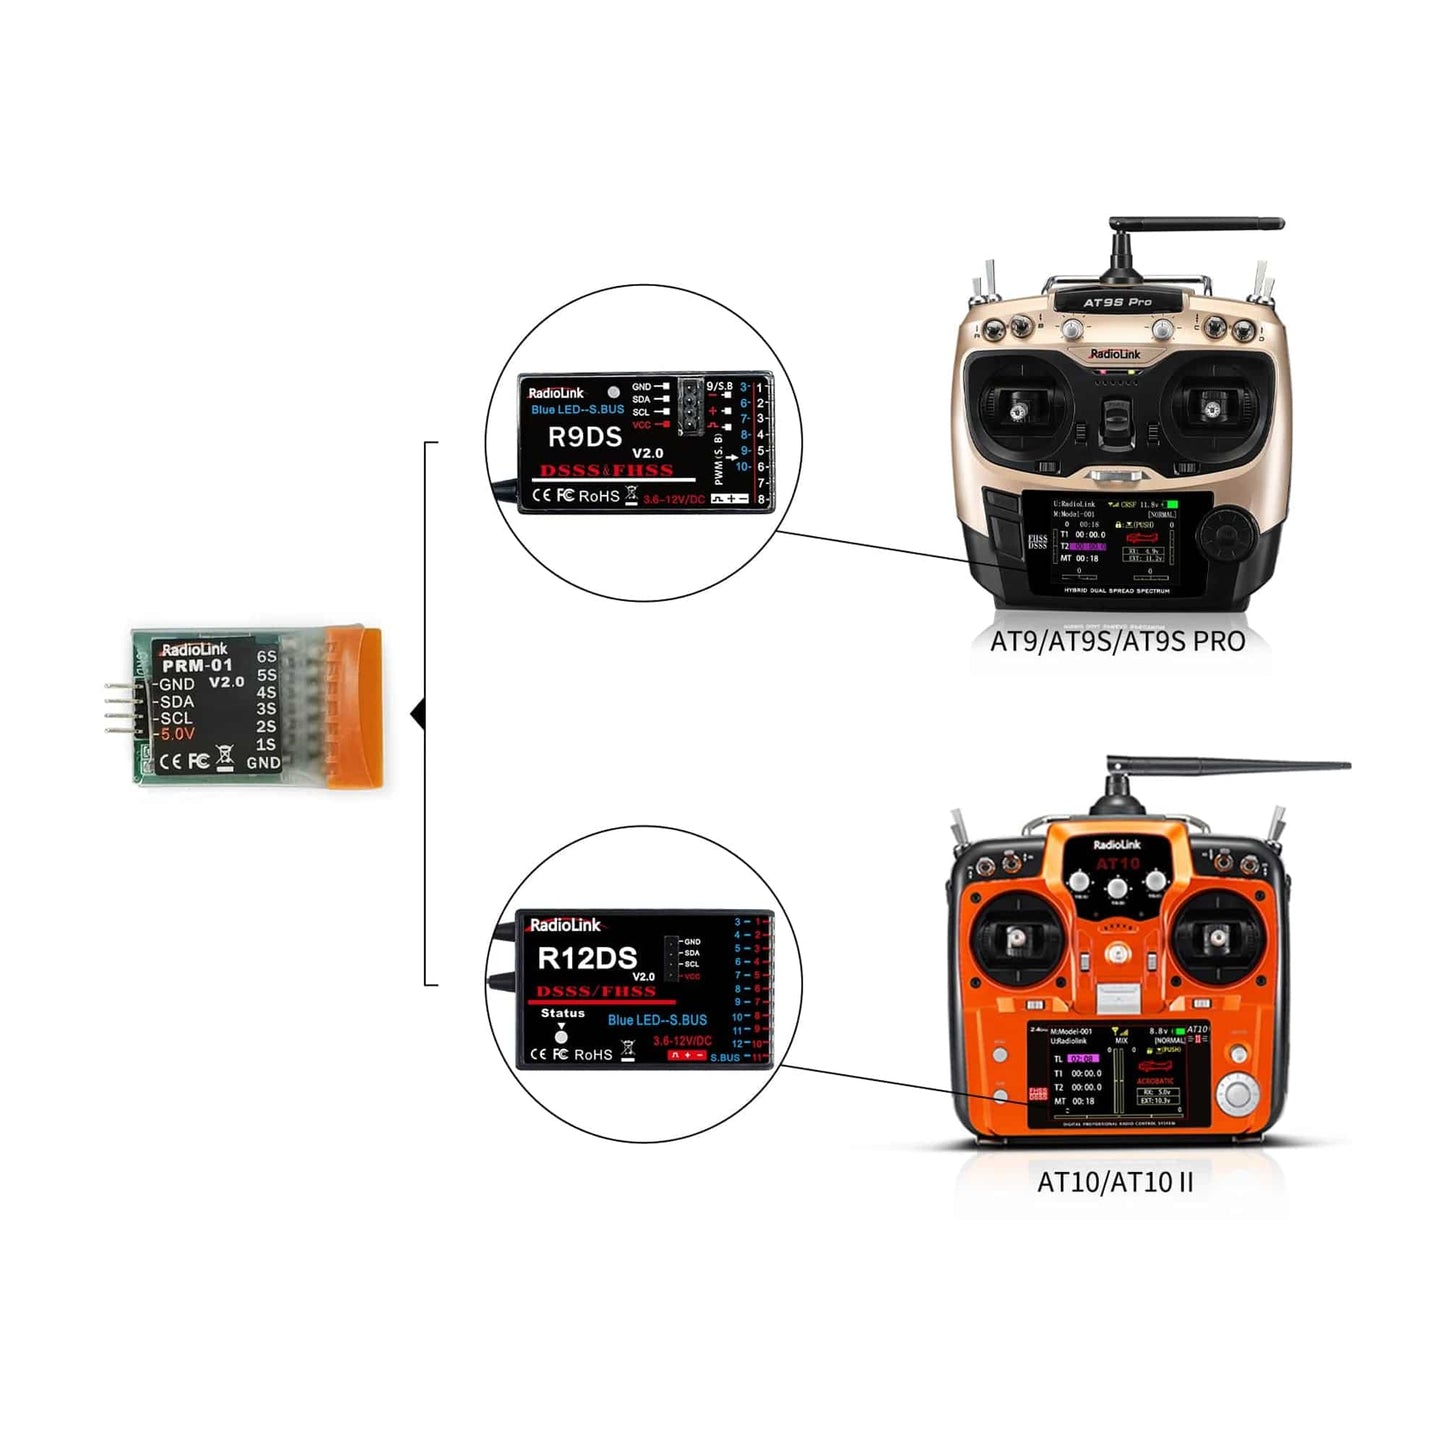 Radiolink PRM-01 Voltage Telemetry Module for RX R12DS, R9DS